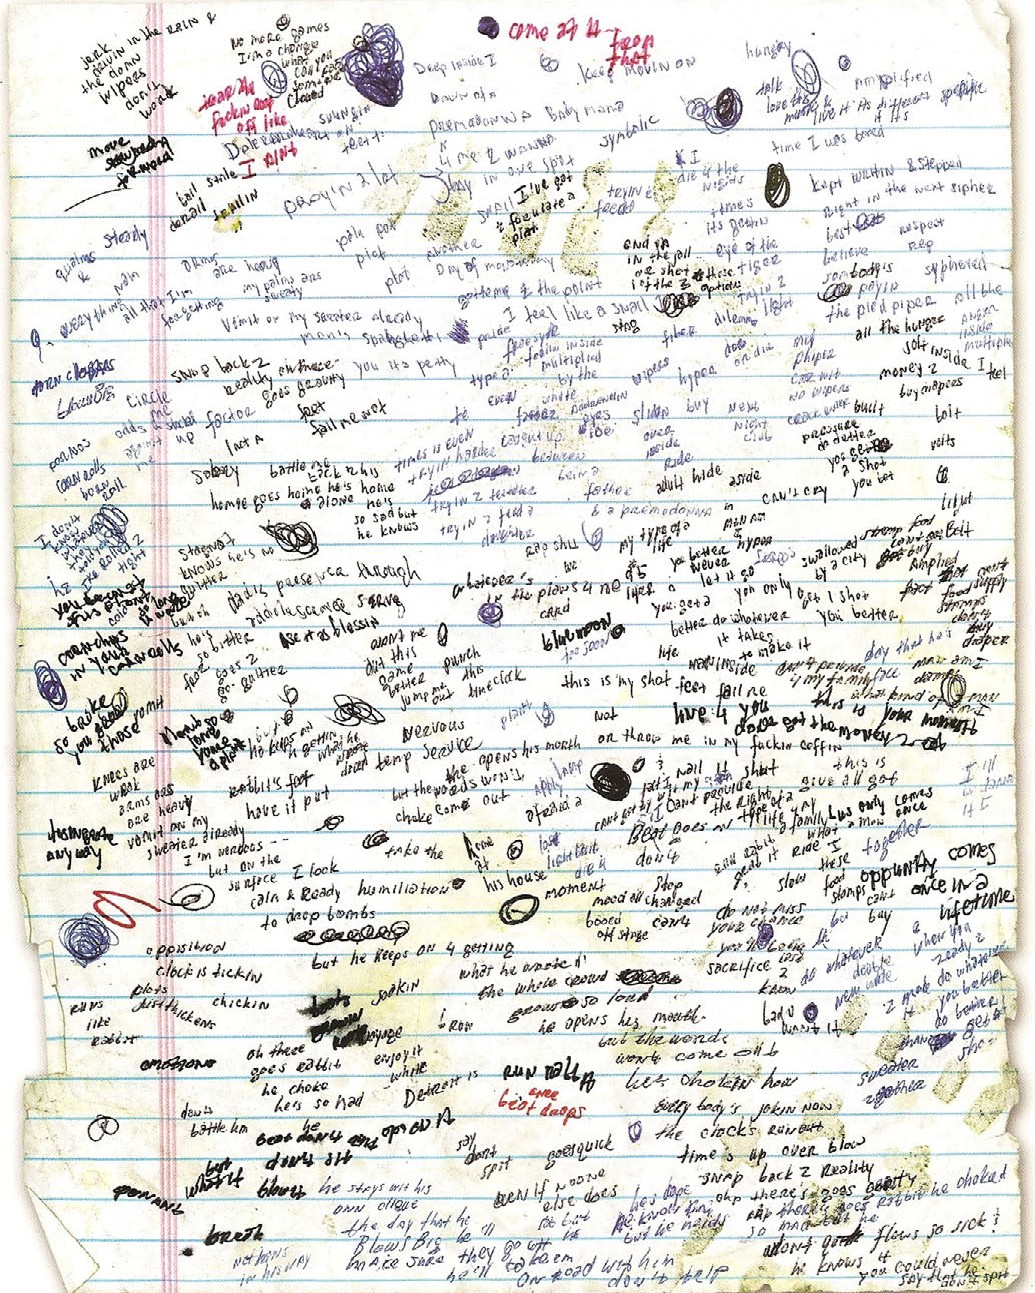 Eminem’s hand written lyrics for Lose Yourself